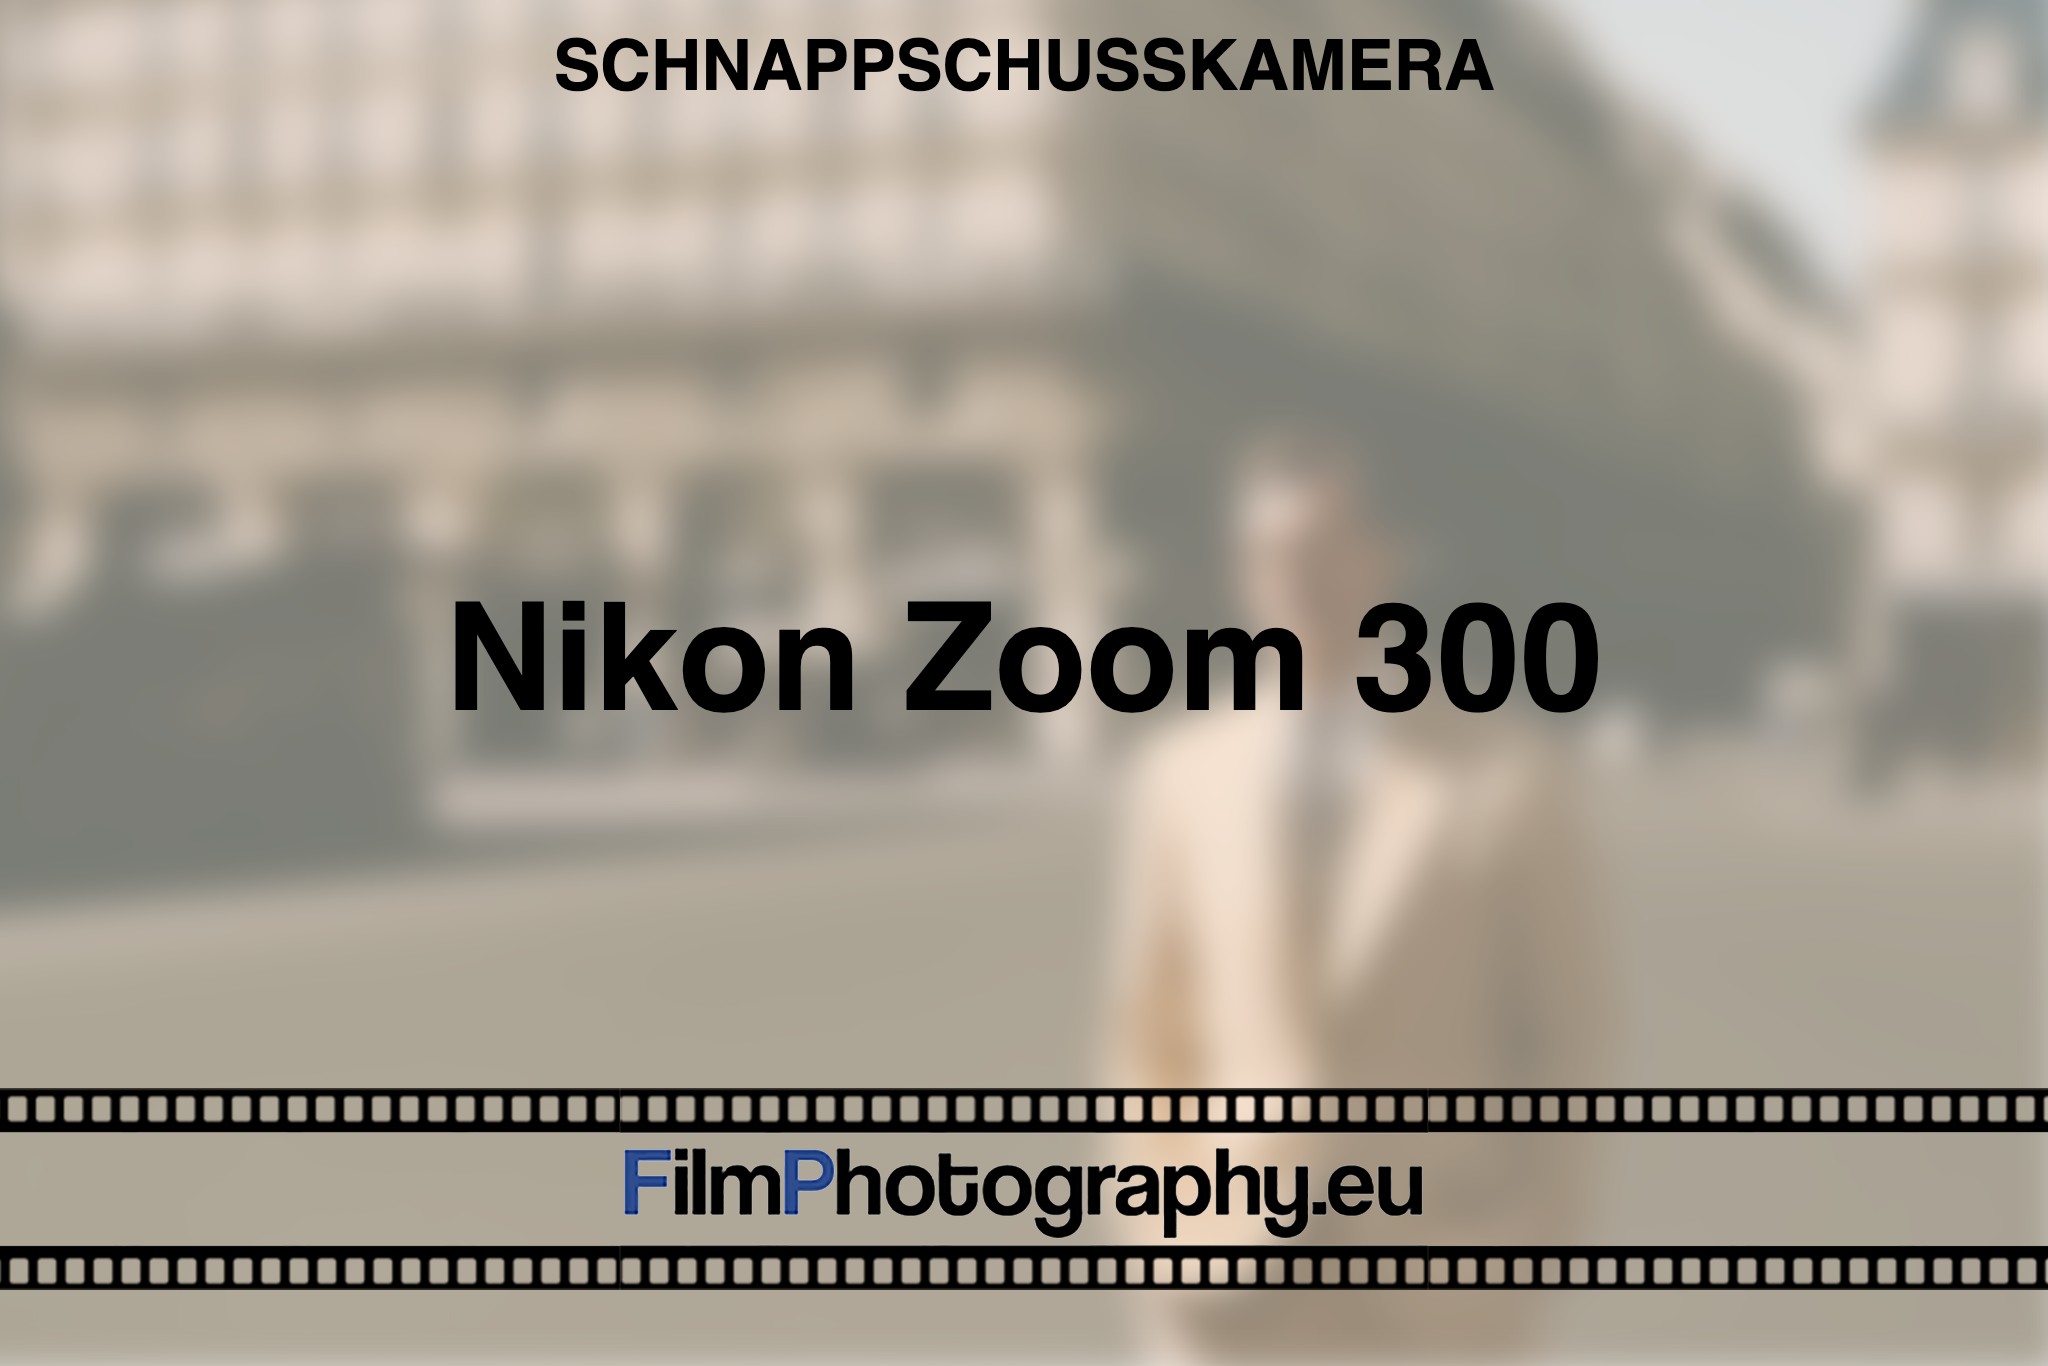 nikon-zoom-300-schnappschusskamera-bnv